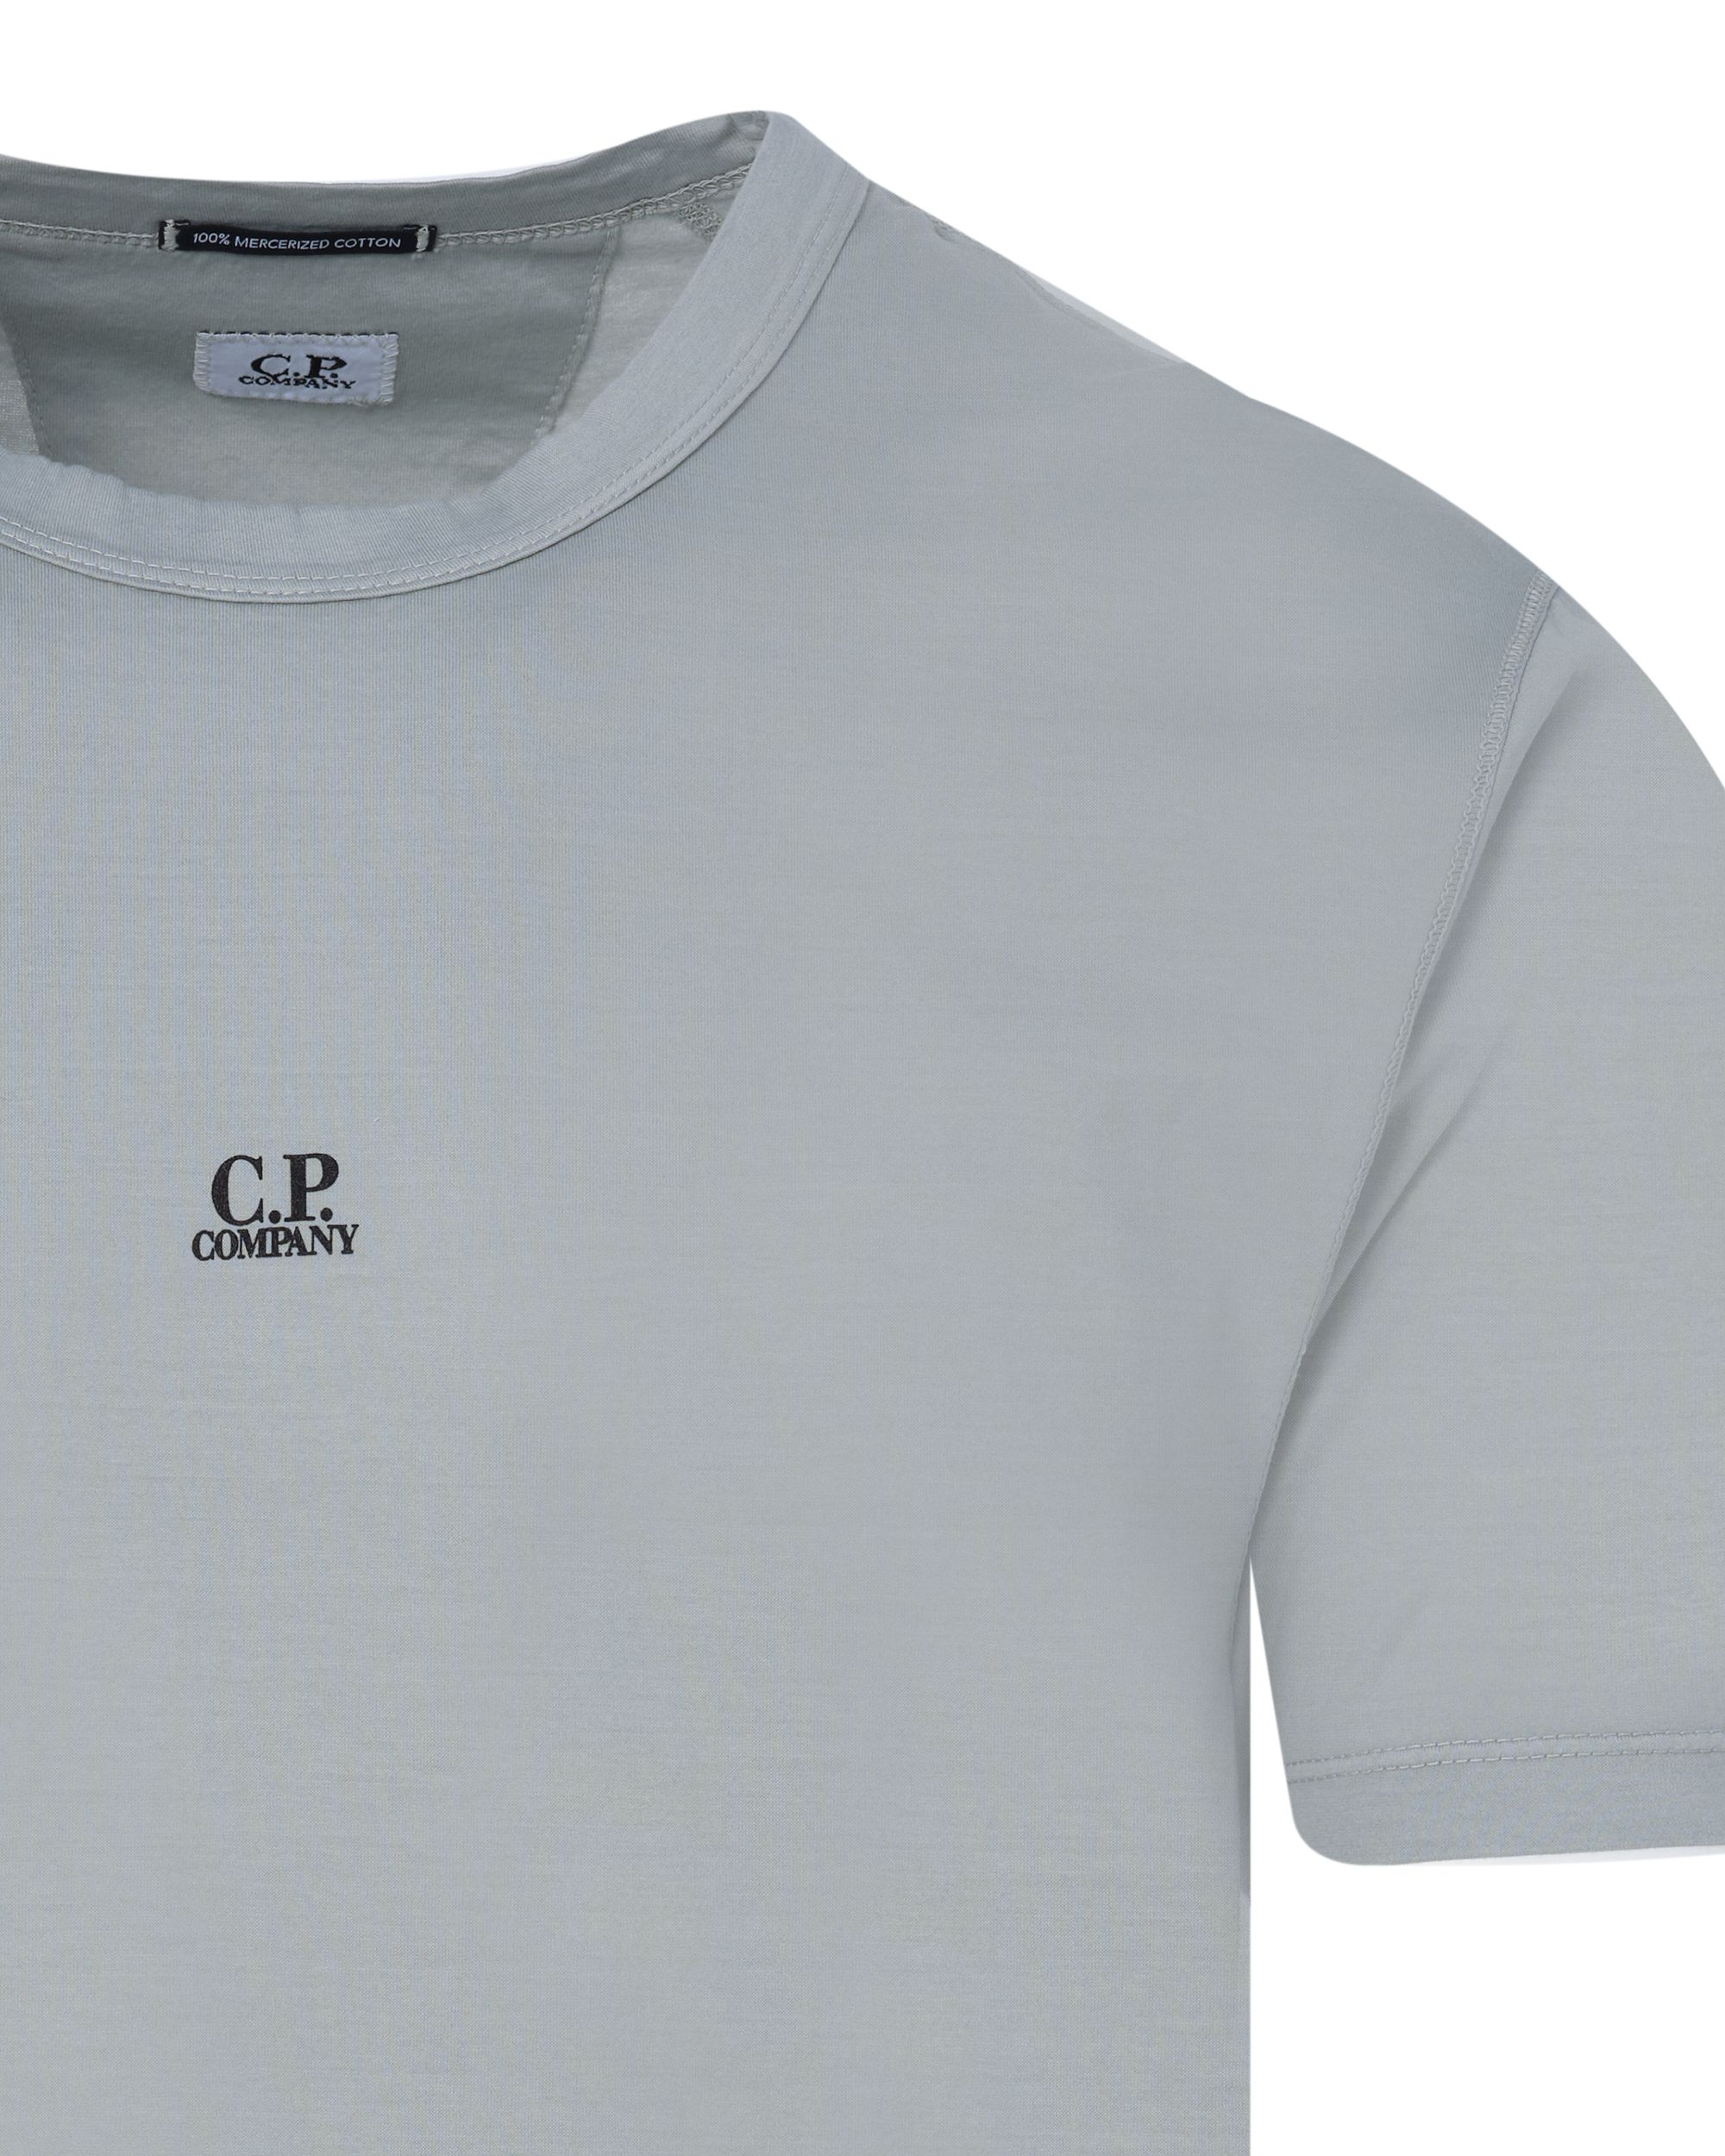 C.P Company T-shirt KM Licht groen 082473-001-L